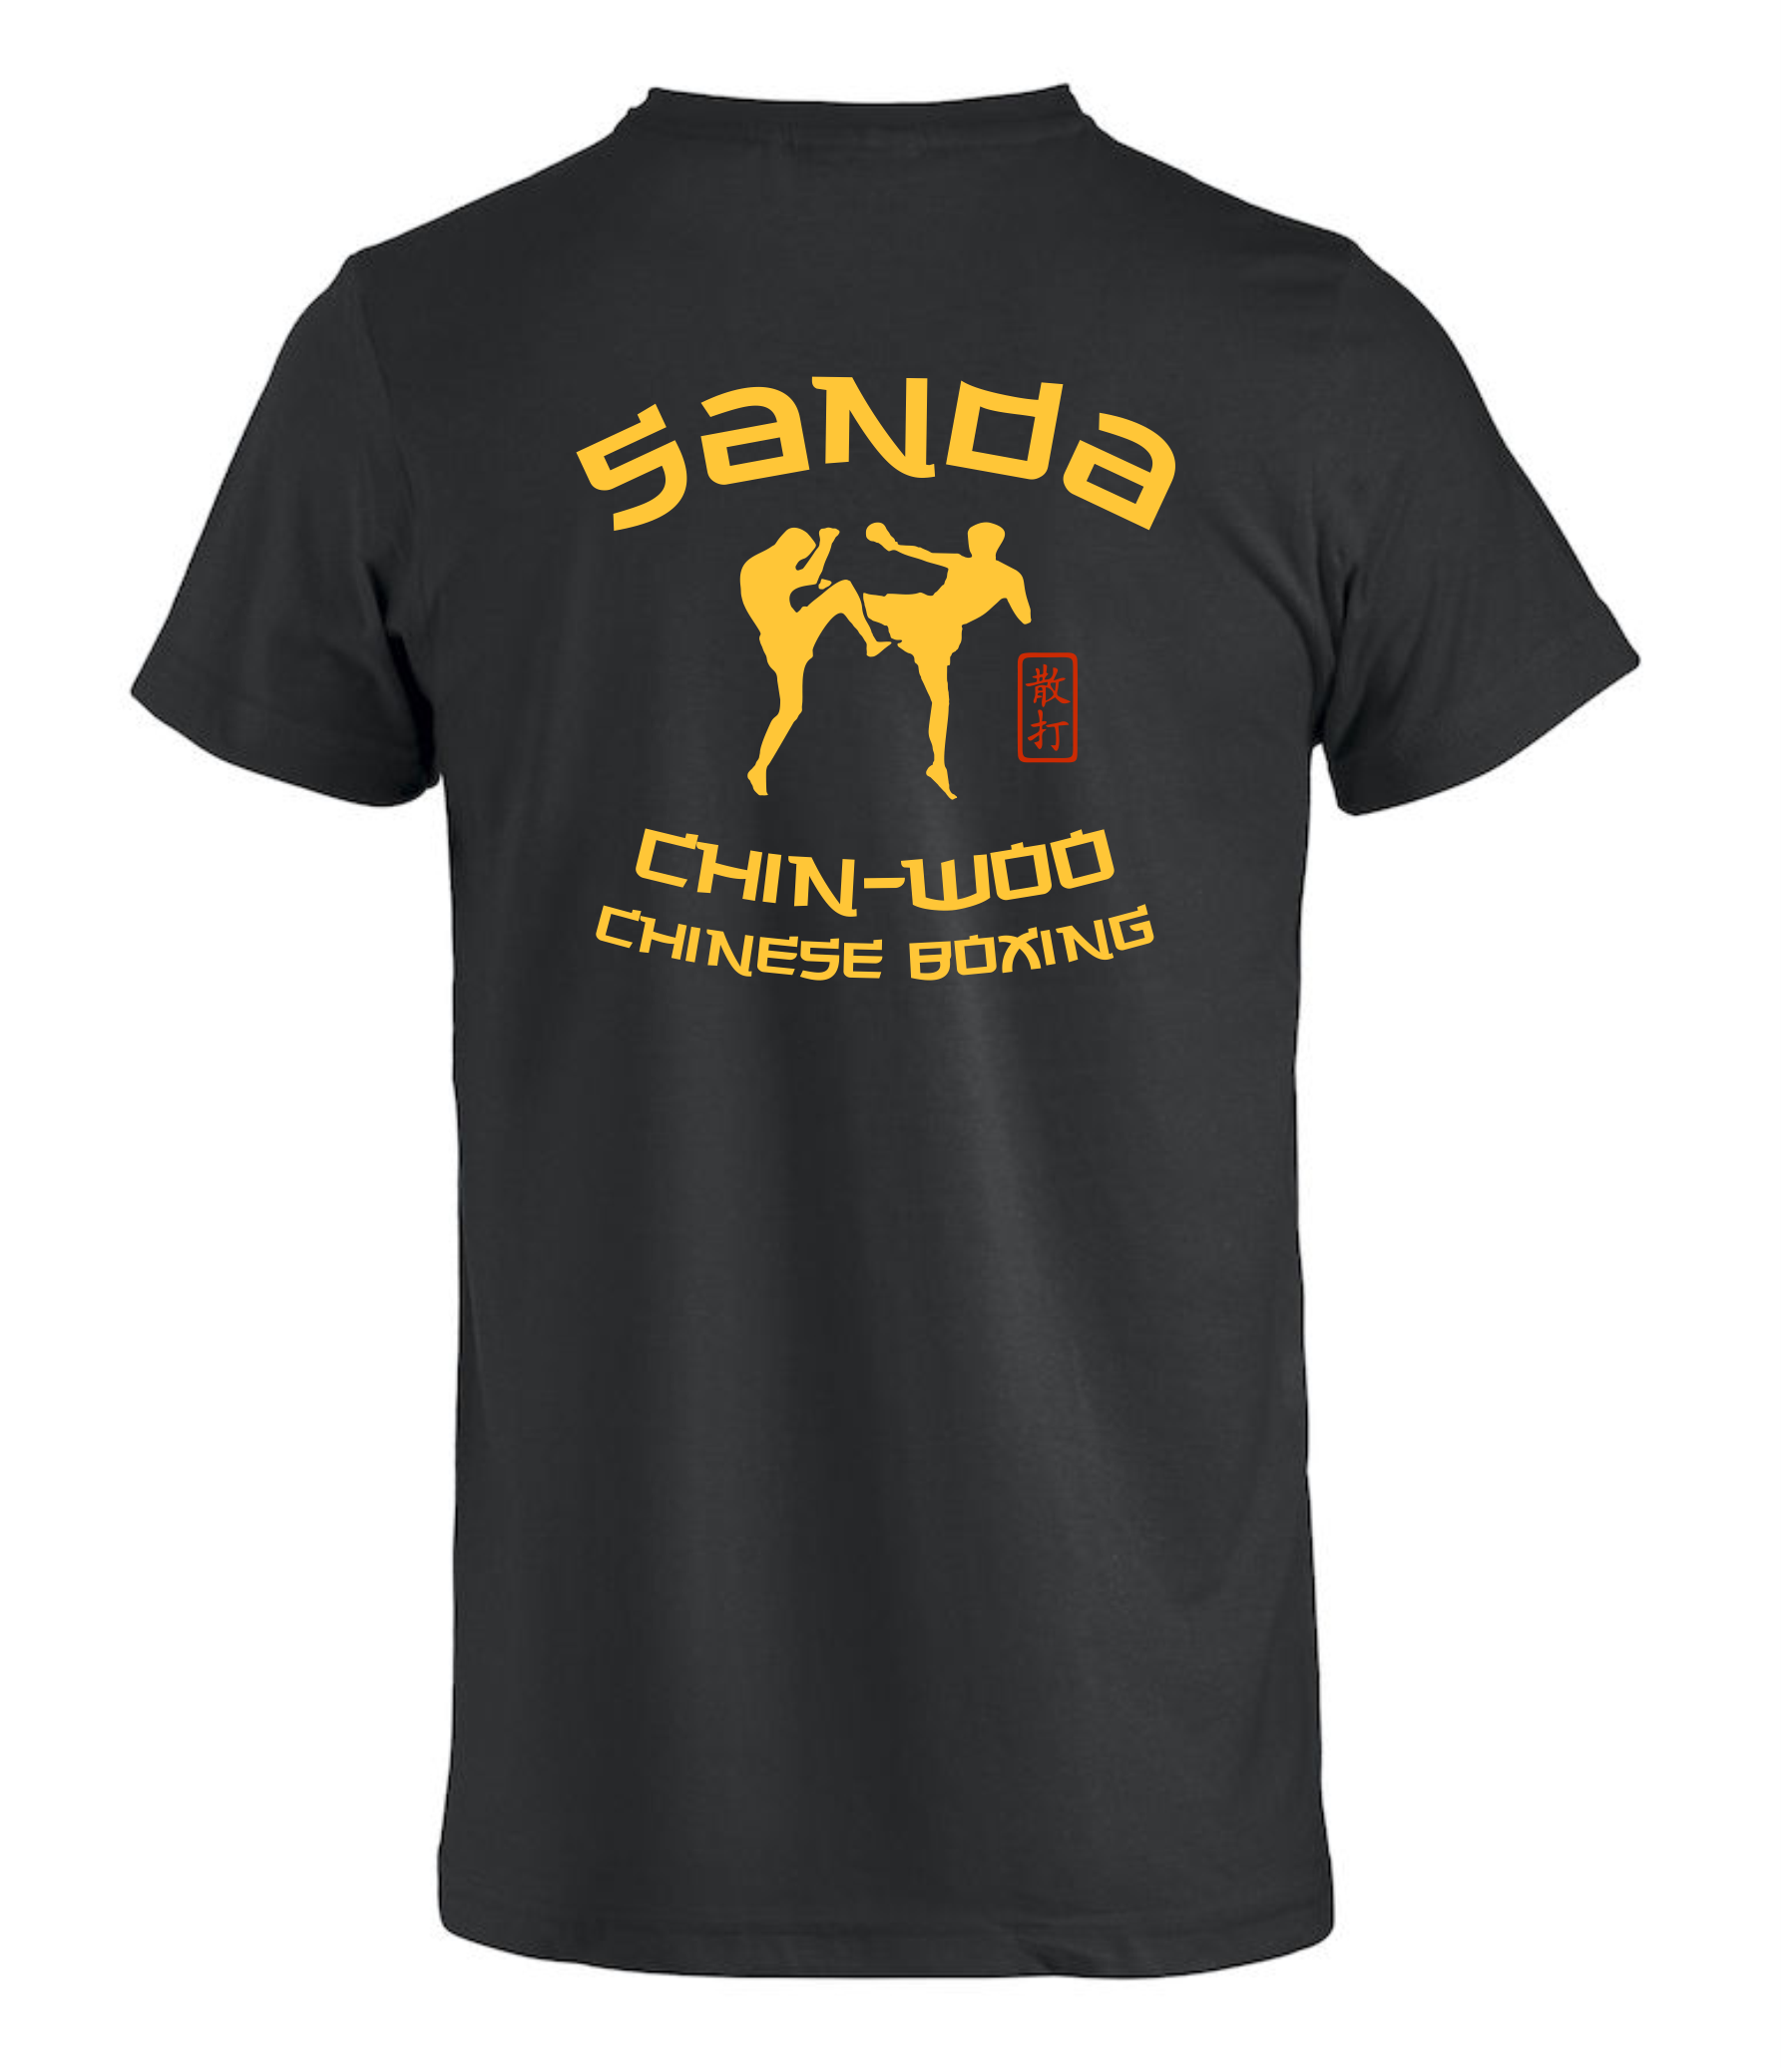 Sanda T-Shirt schwarz